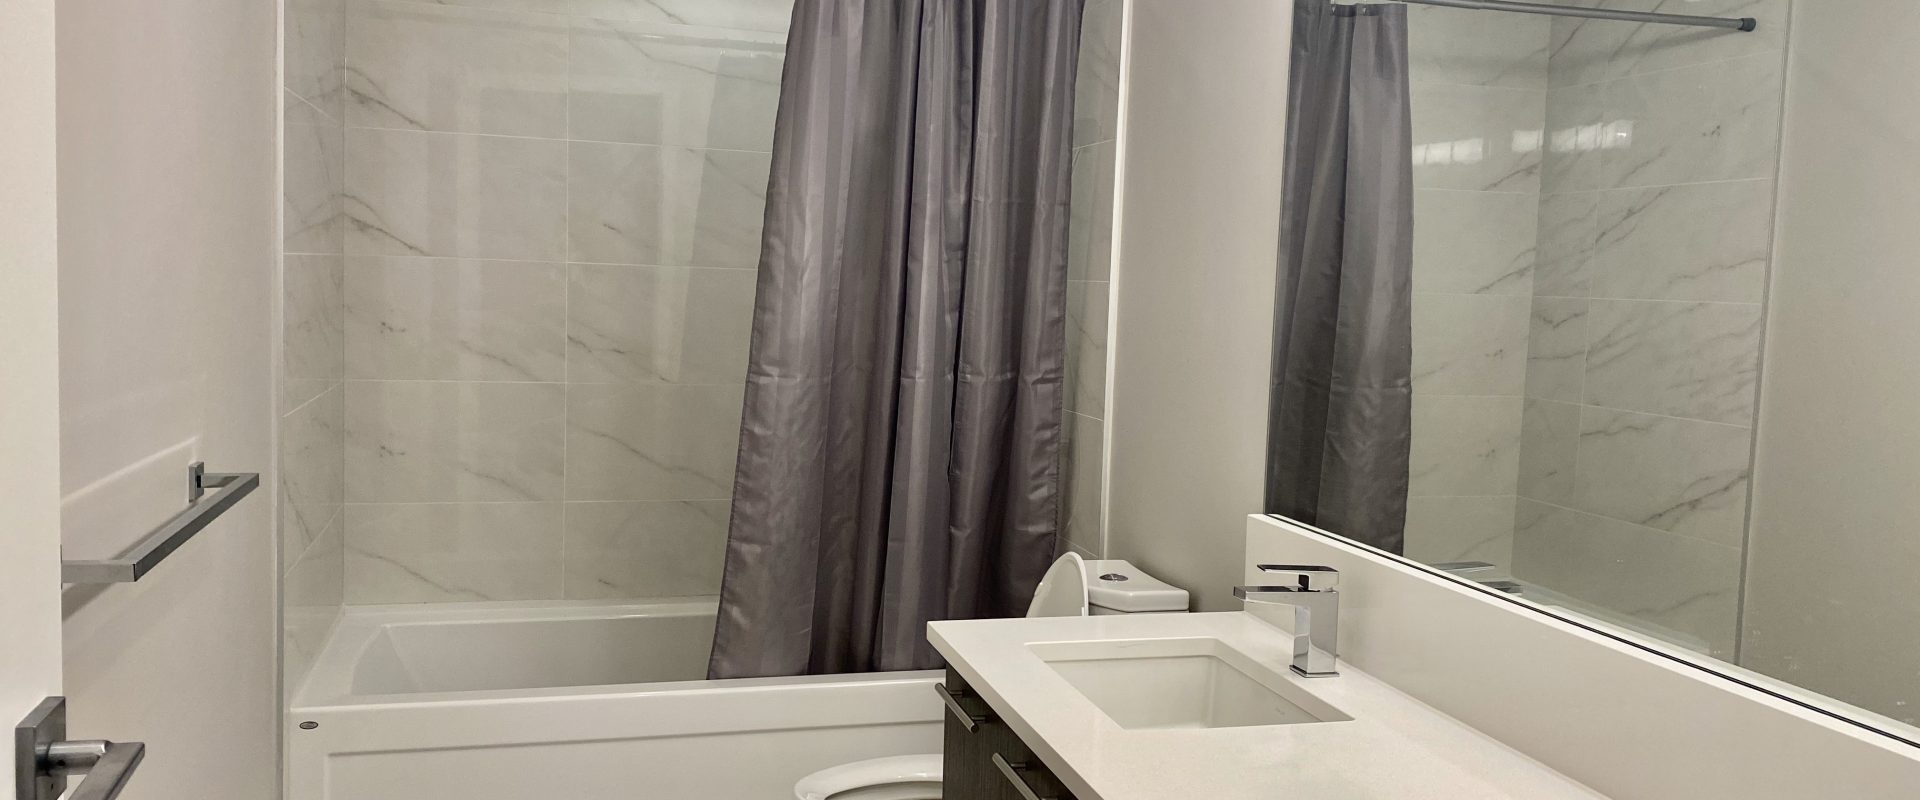 Well Maintained Luxury 2 Bedroom 2 Bath Condo in Okaridge Vancouver!